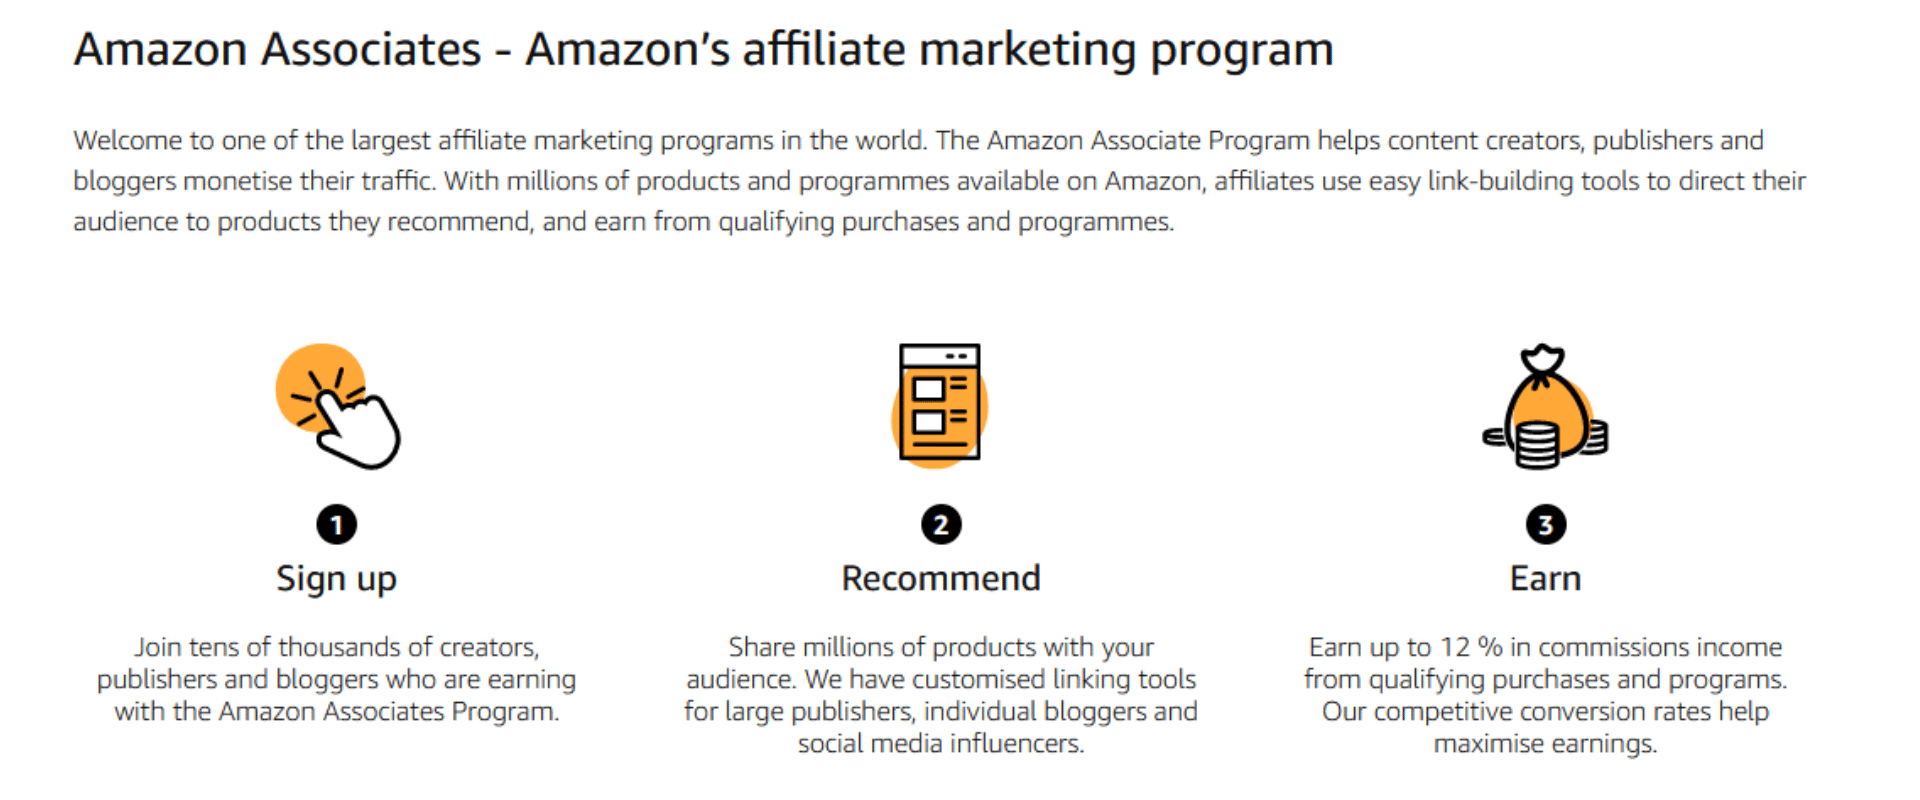 Amazon associates affiliate marketing program.